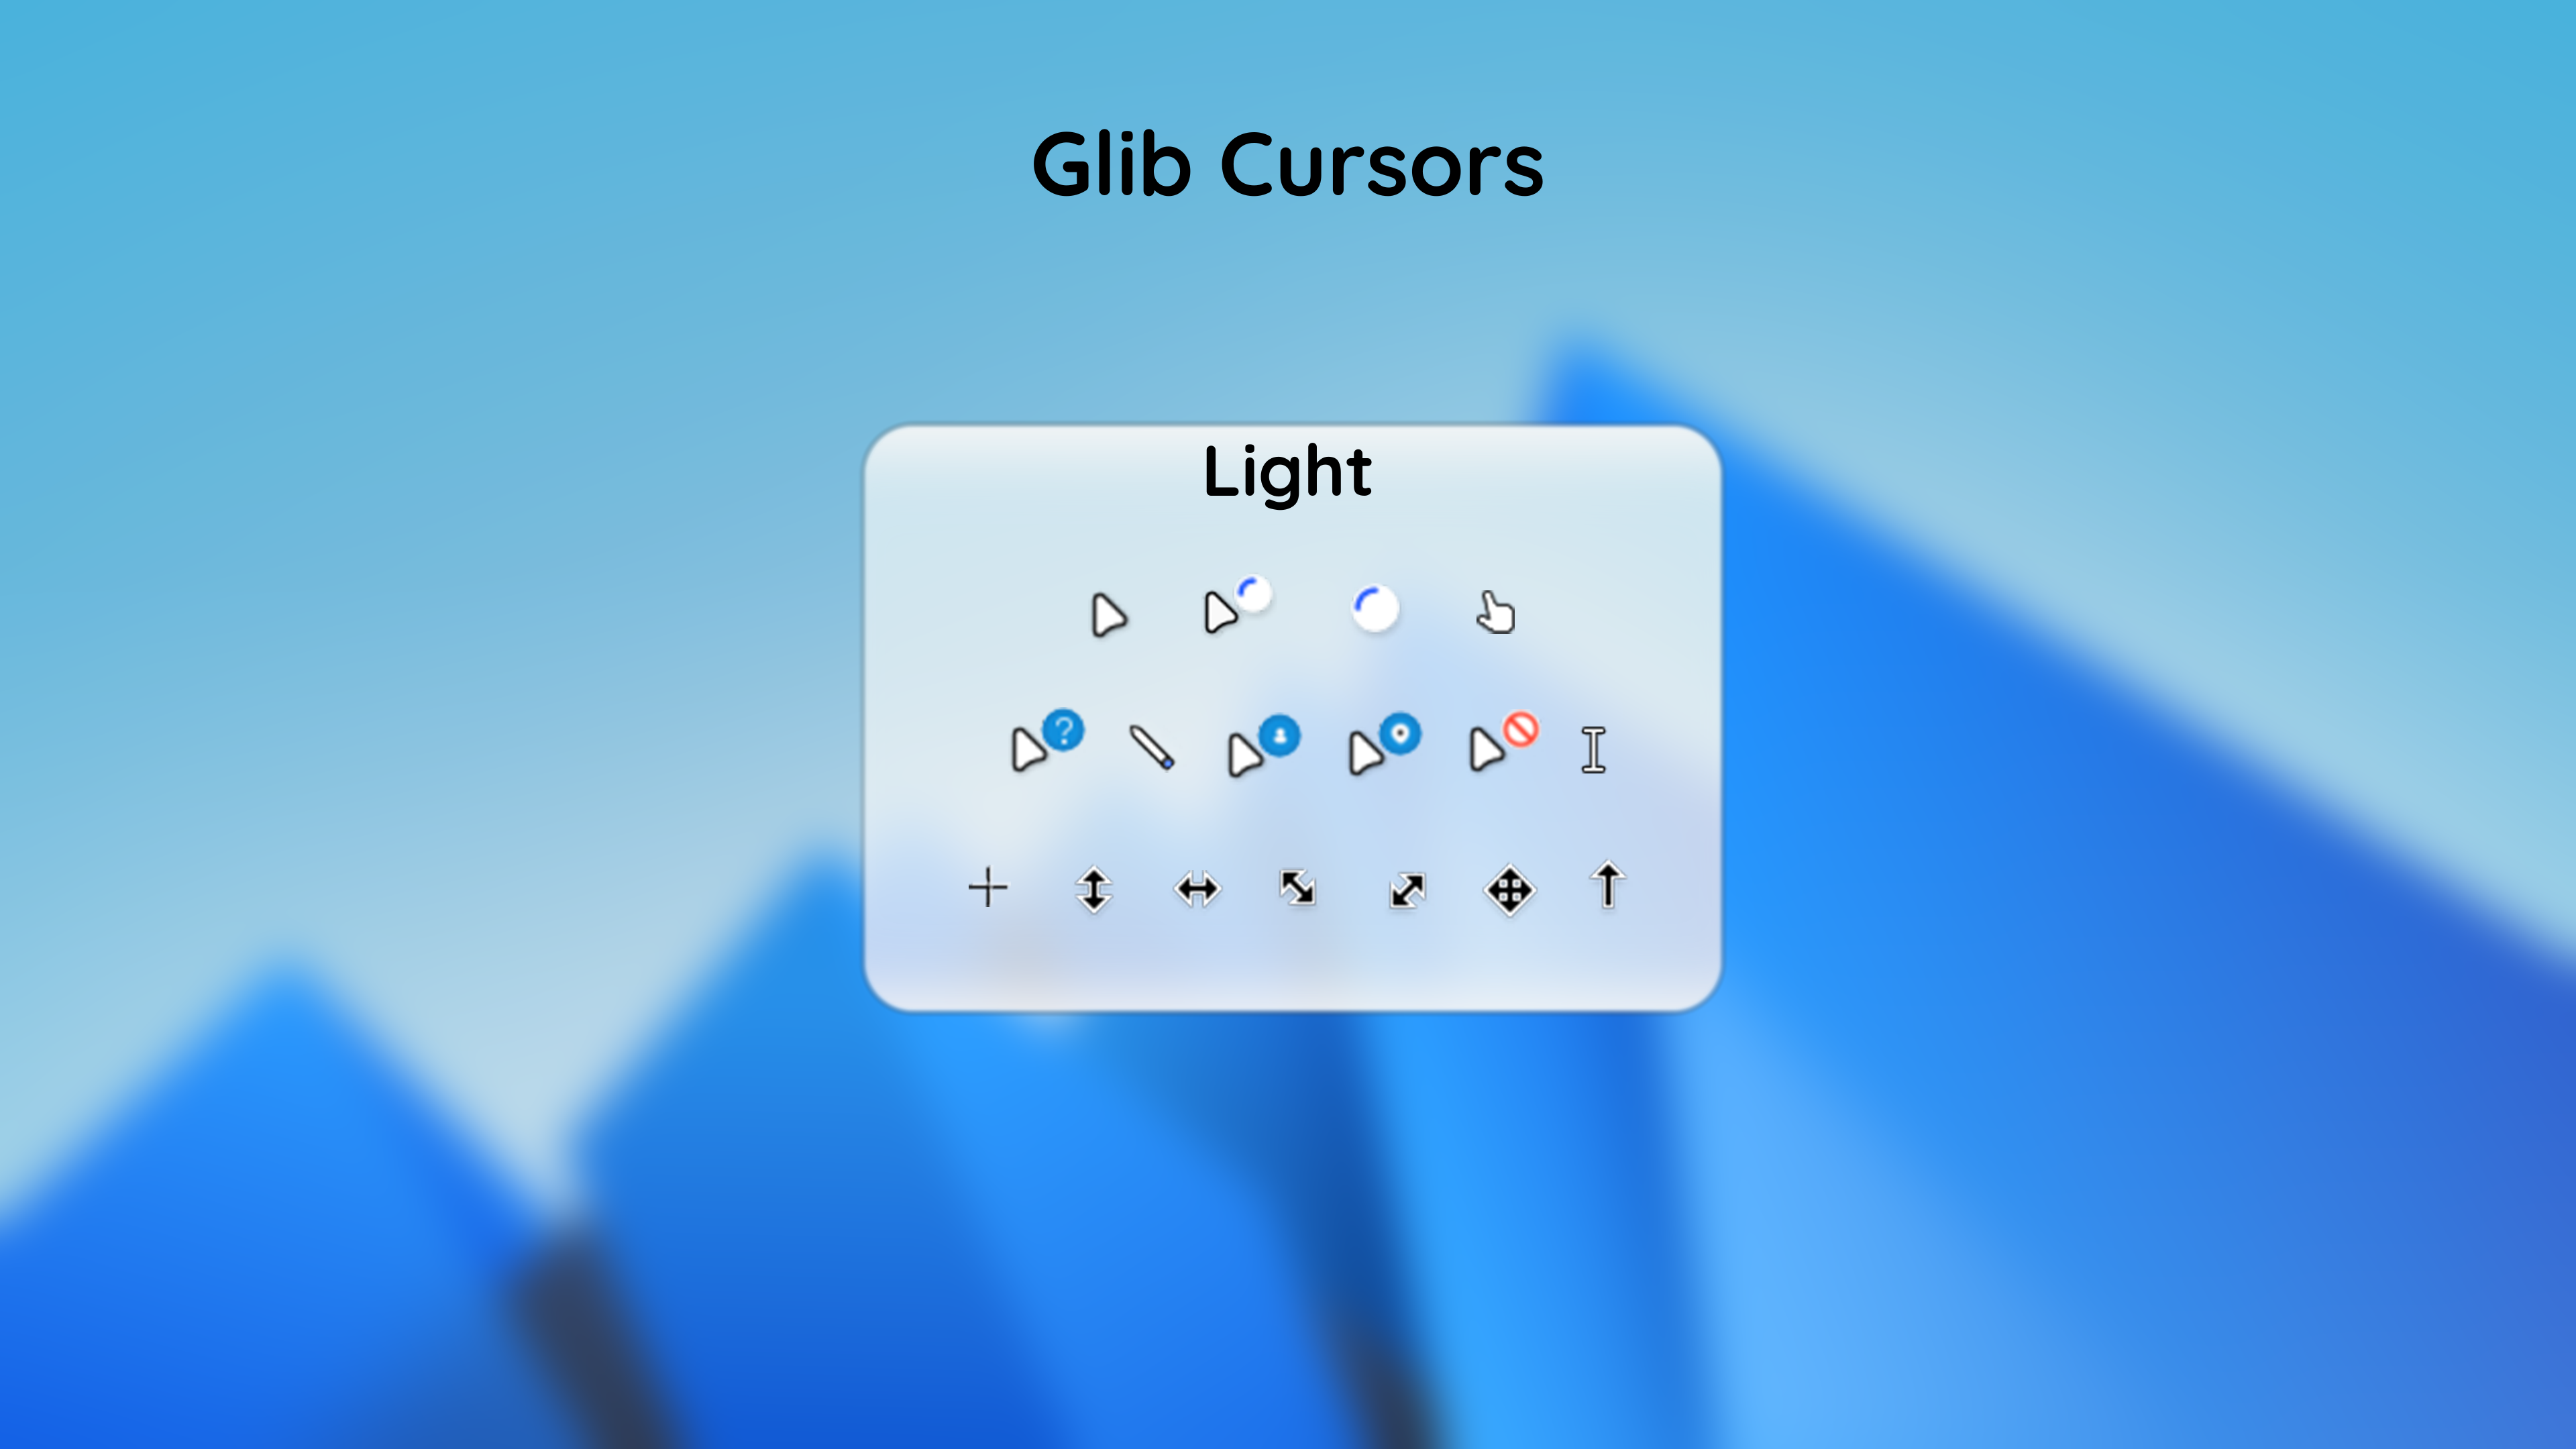 Windows 11 Cursors Concept v2 by jepriCreations on DeviantArt